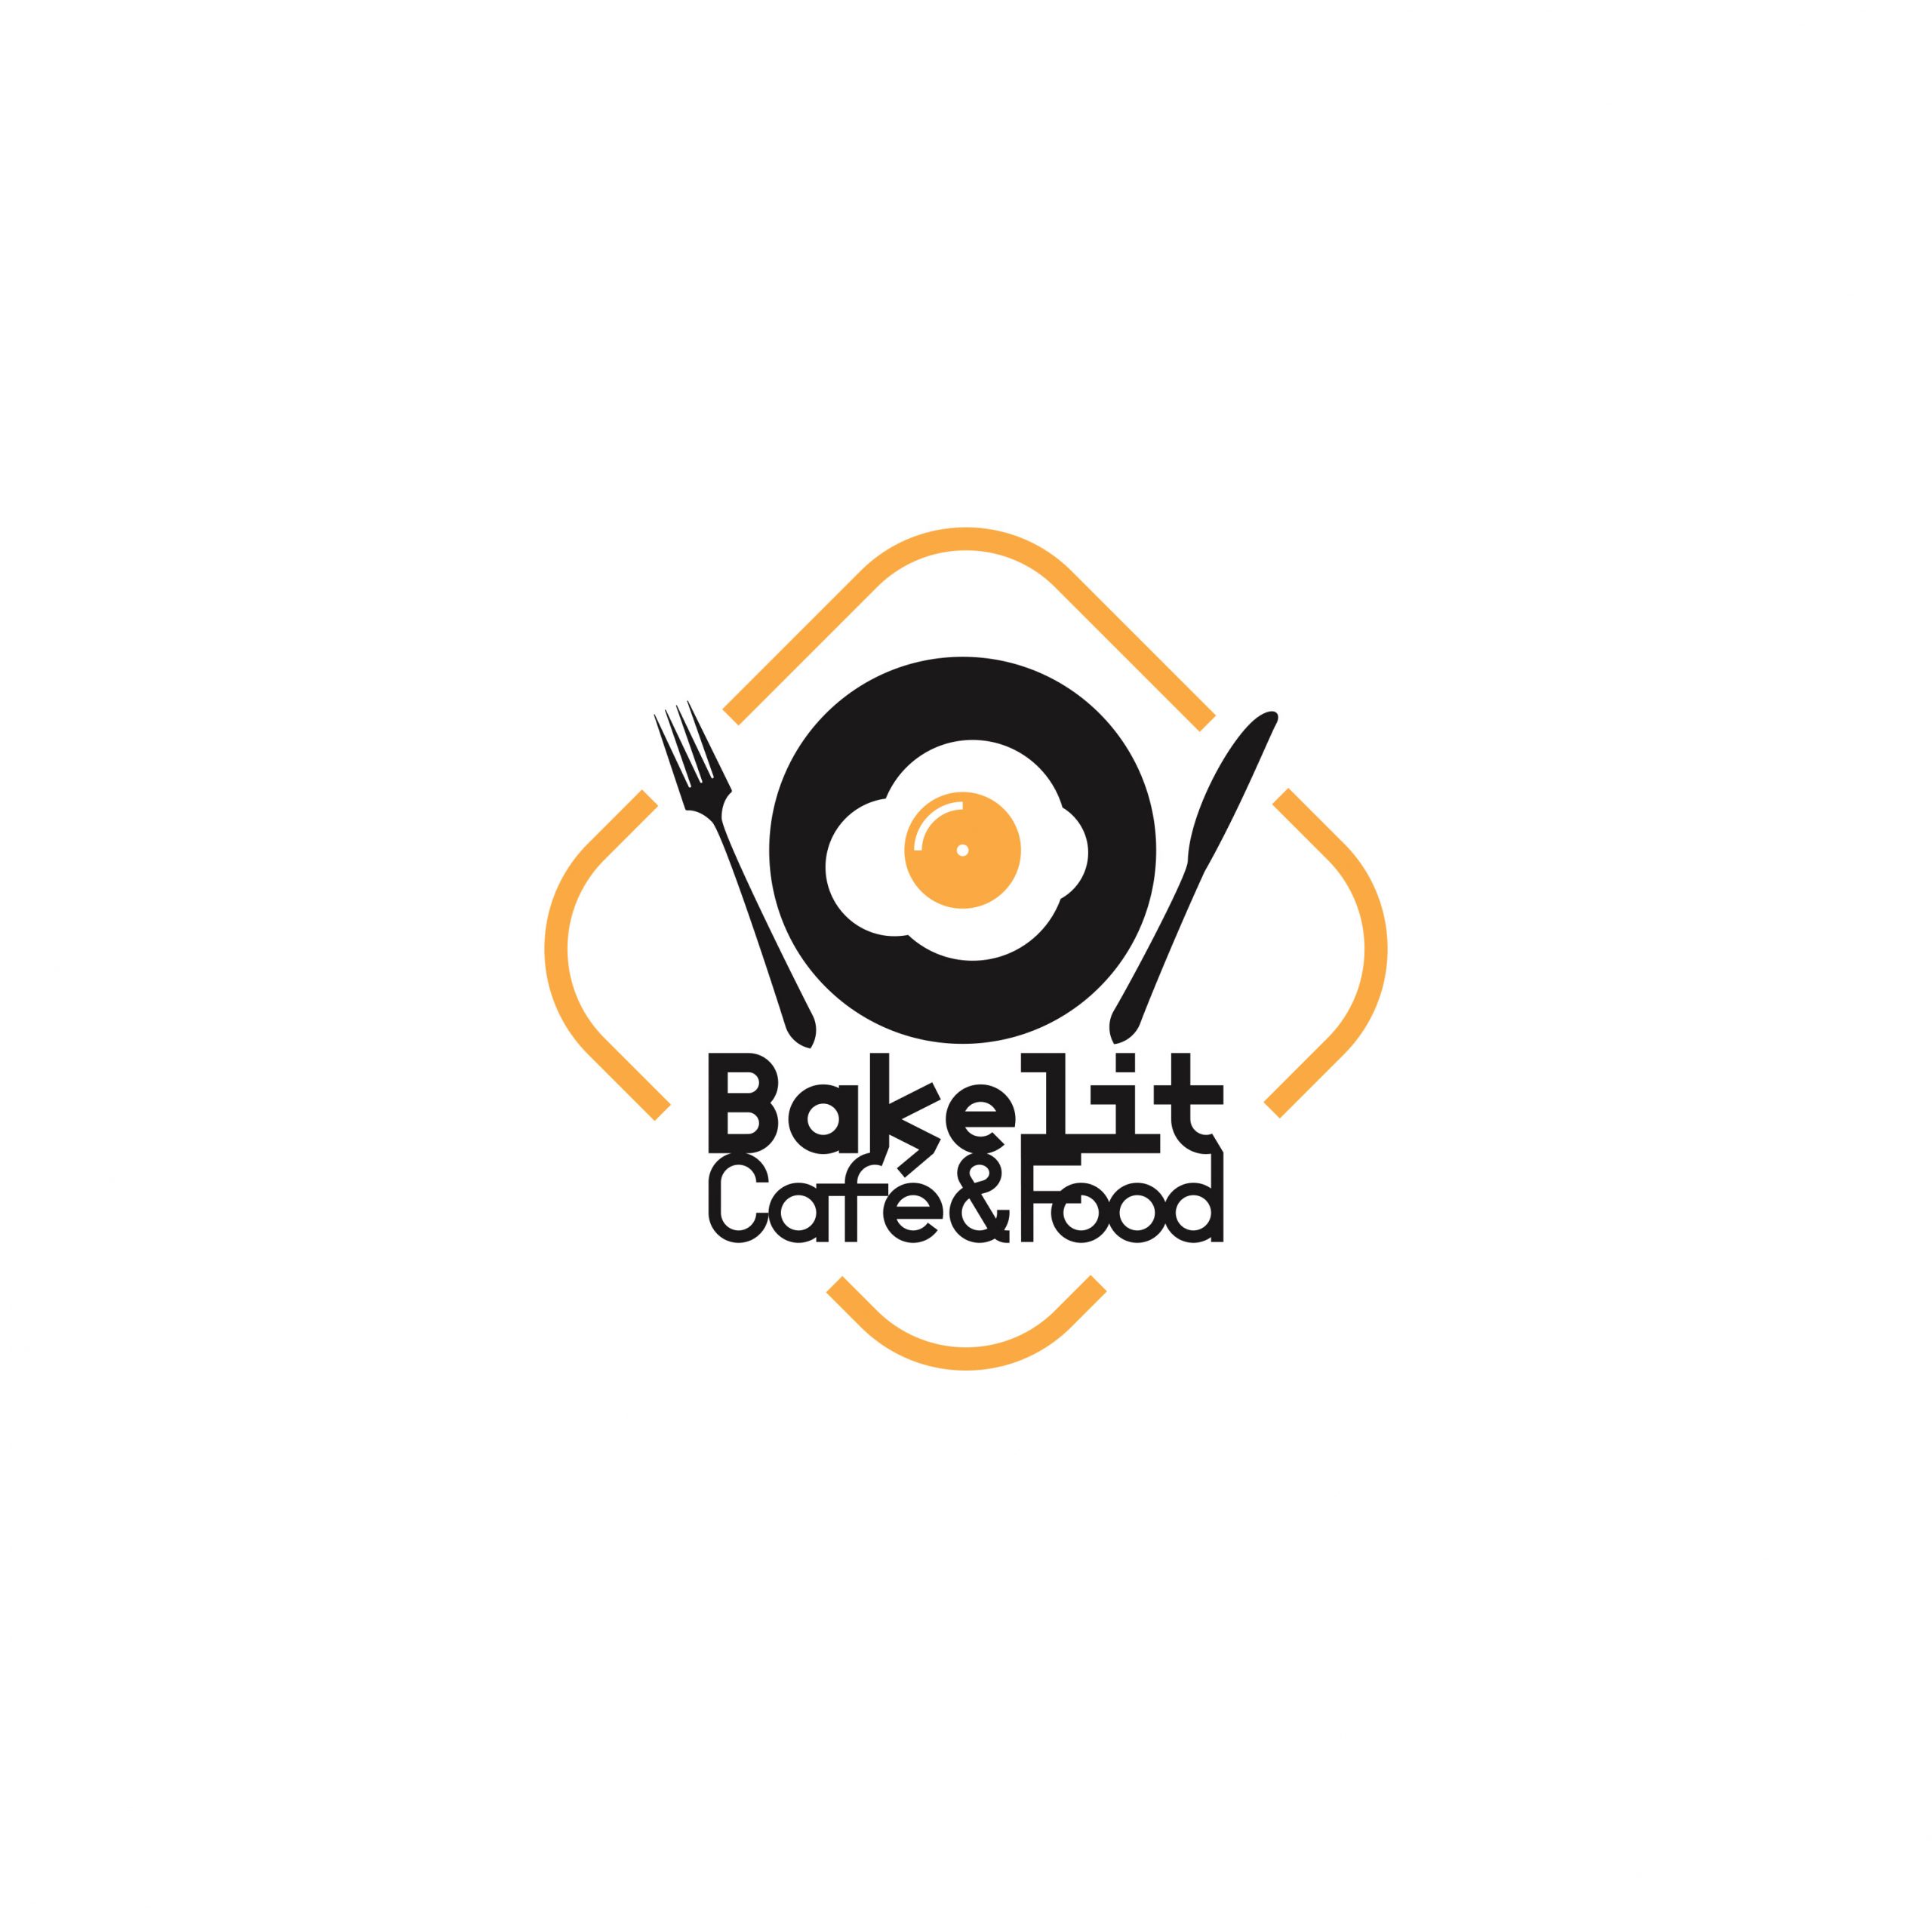 Bakelit Café&Food logo